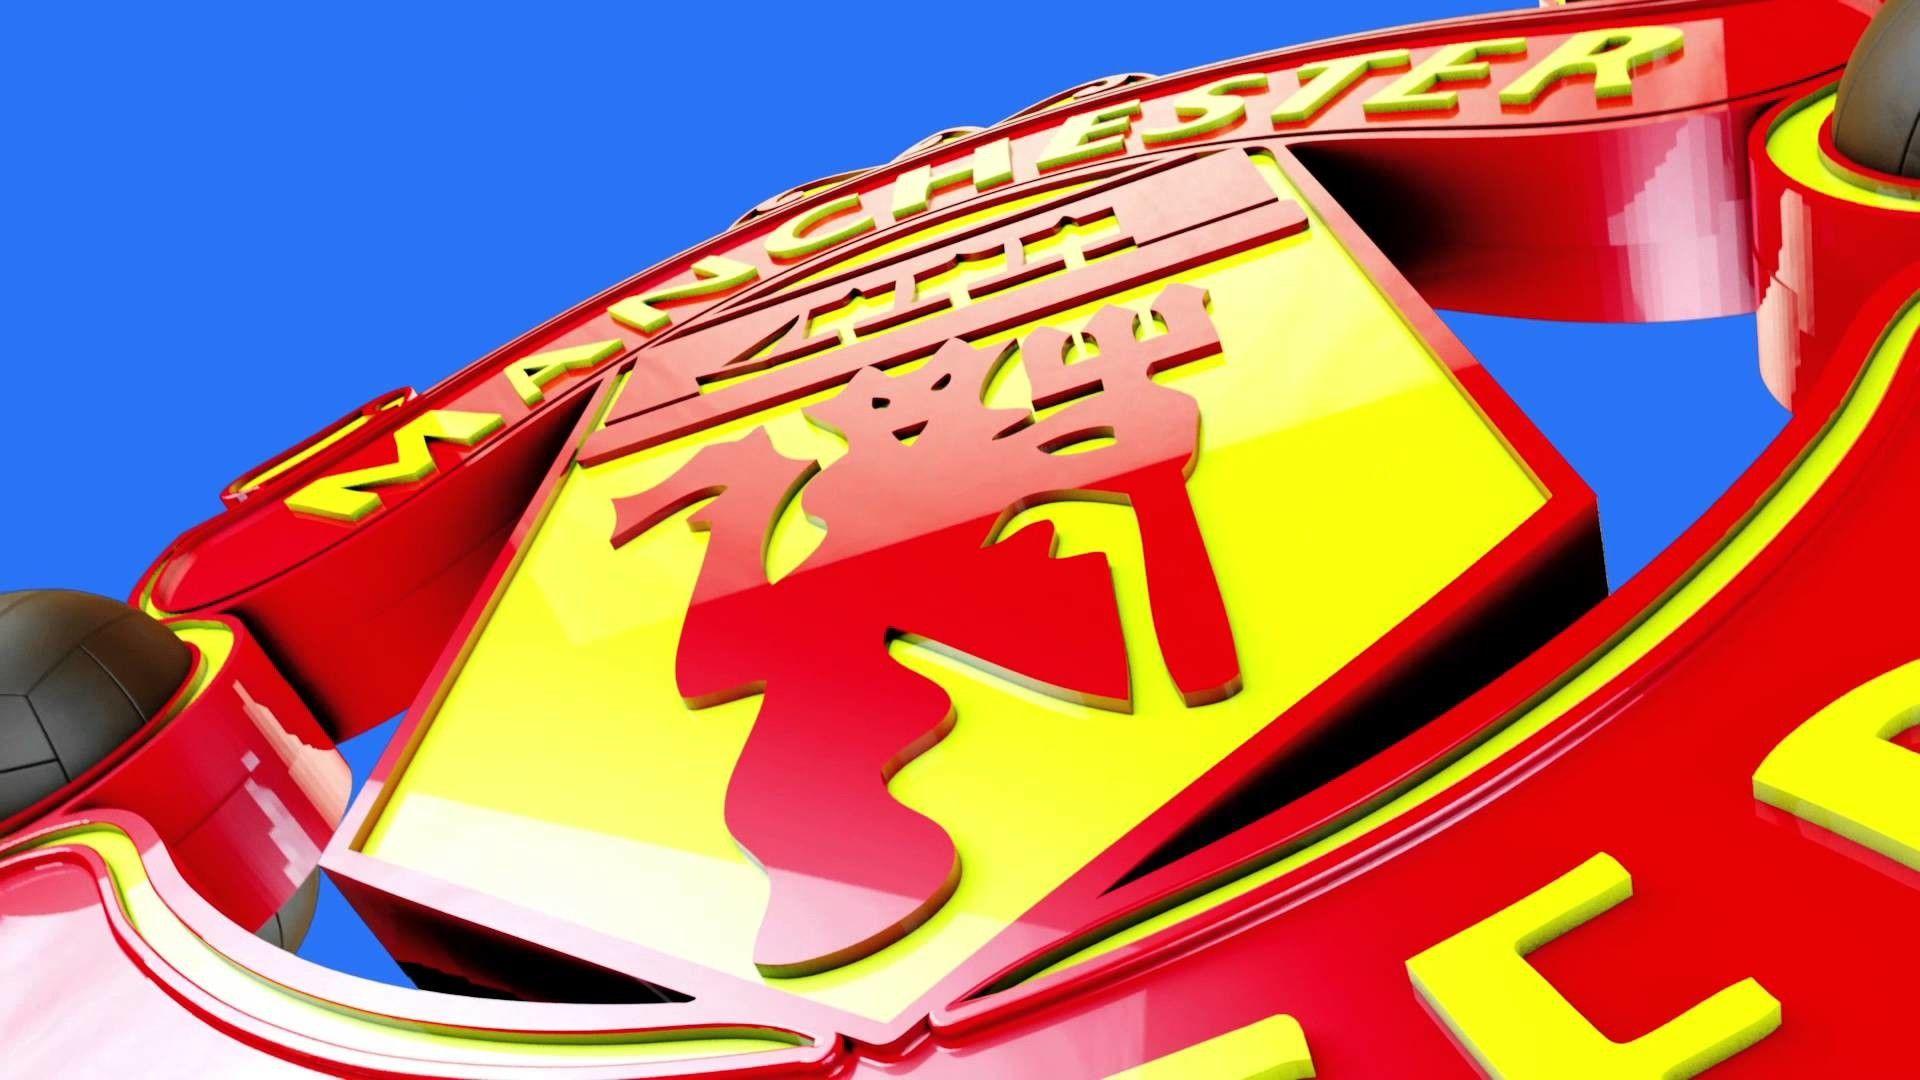 Manchester United Logo Wallpaper HD 2017.com